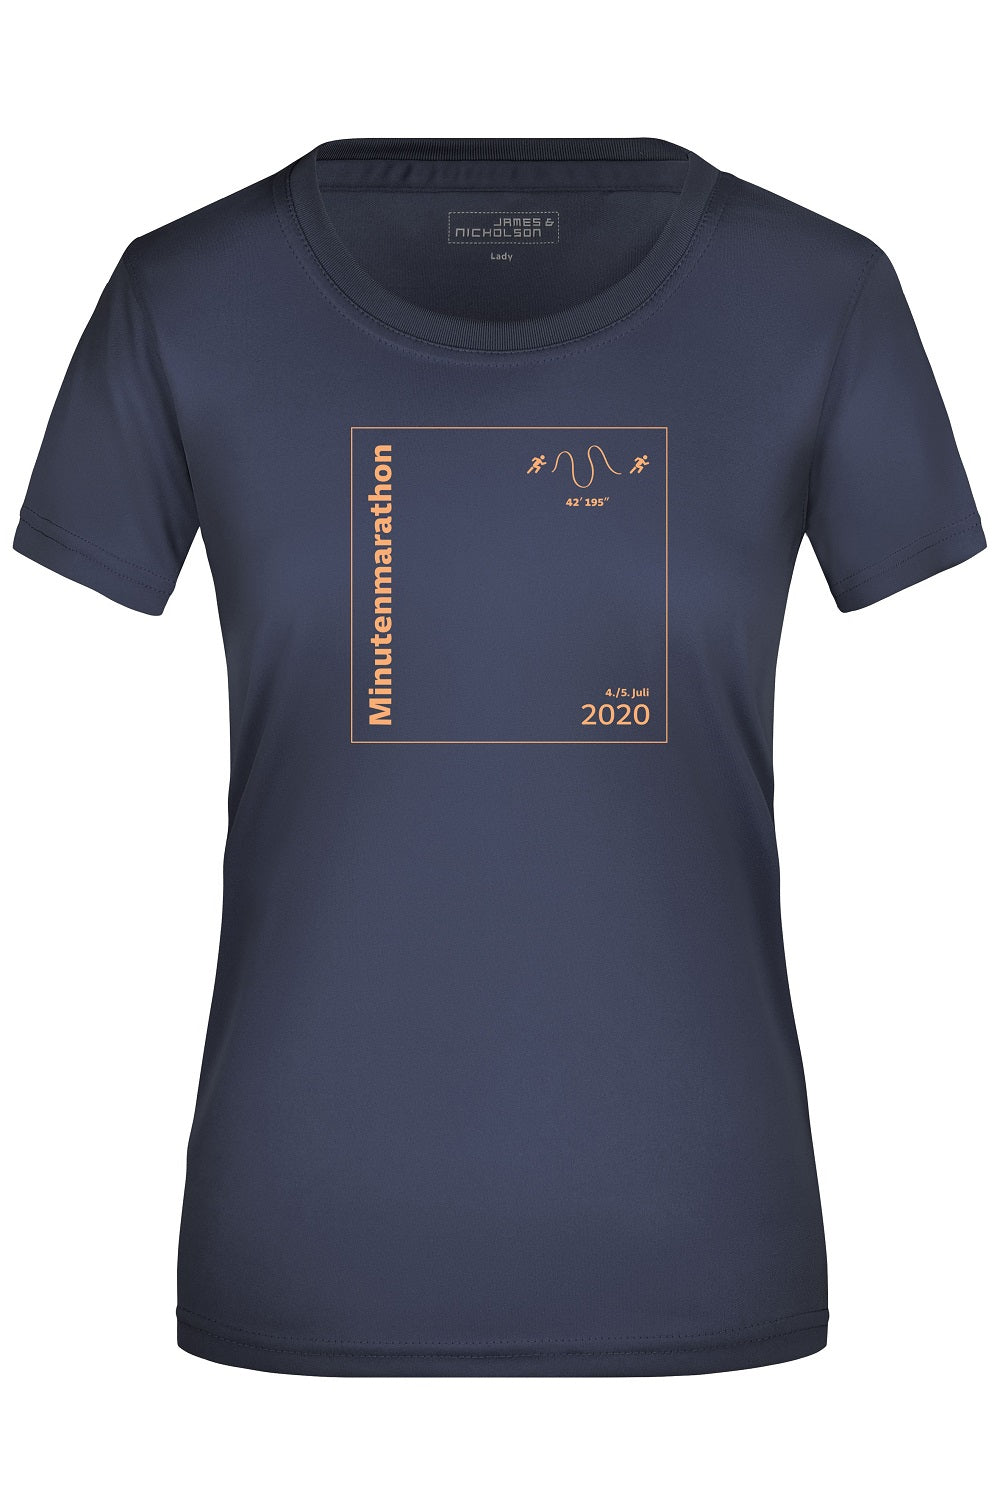 XL - Damen SZ Laufshirt, blau, Minutenmarathon - Bild 1